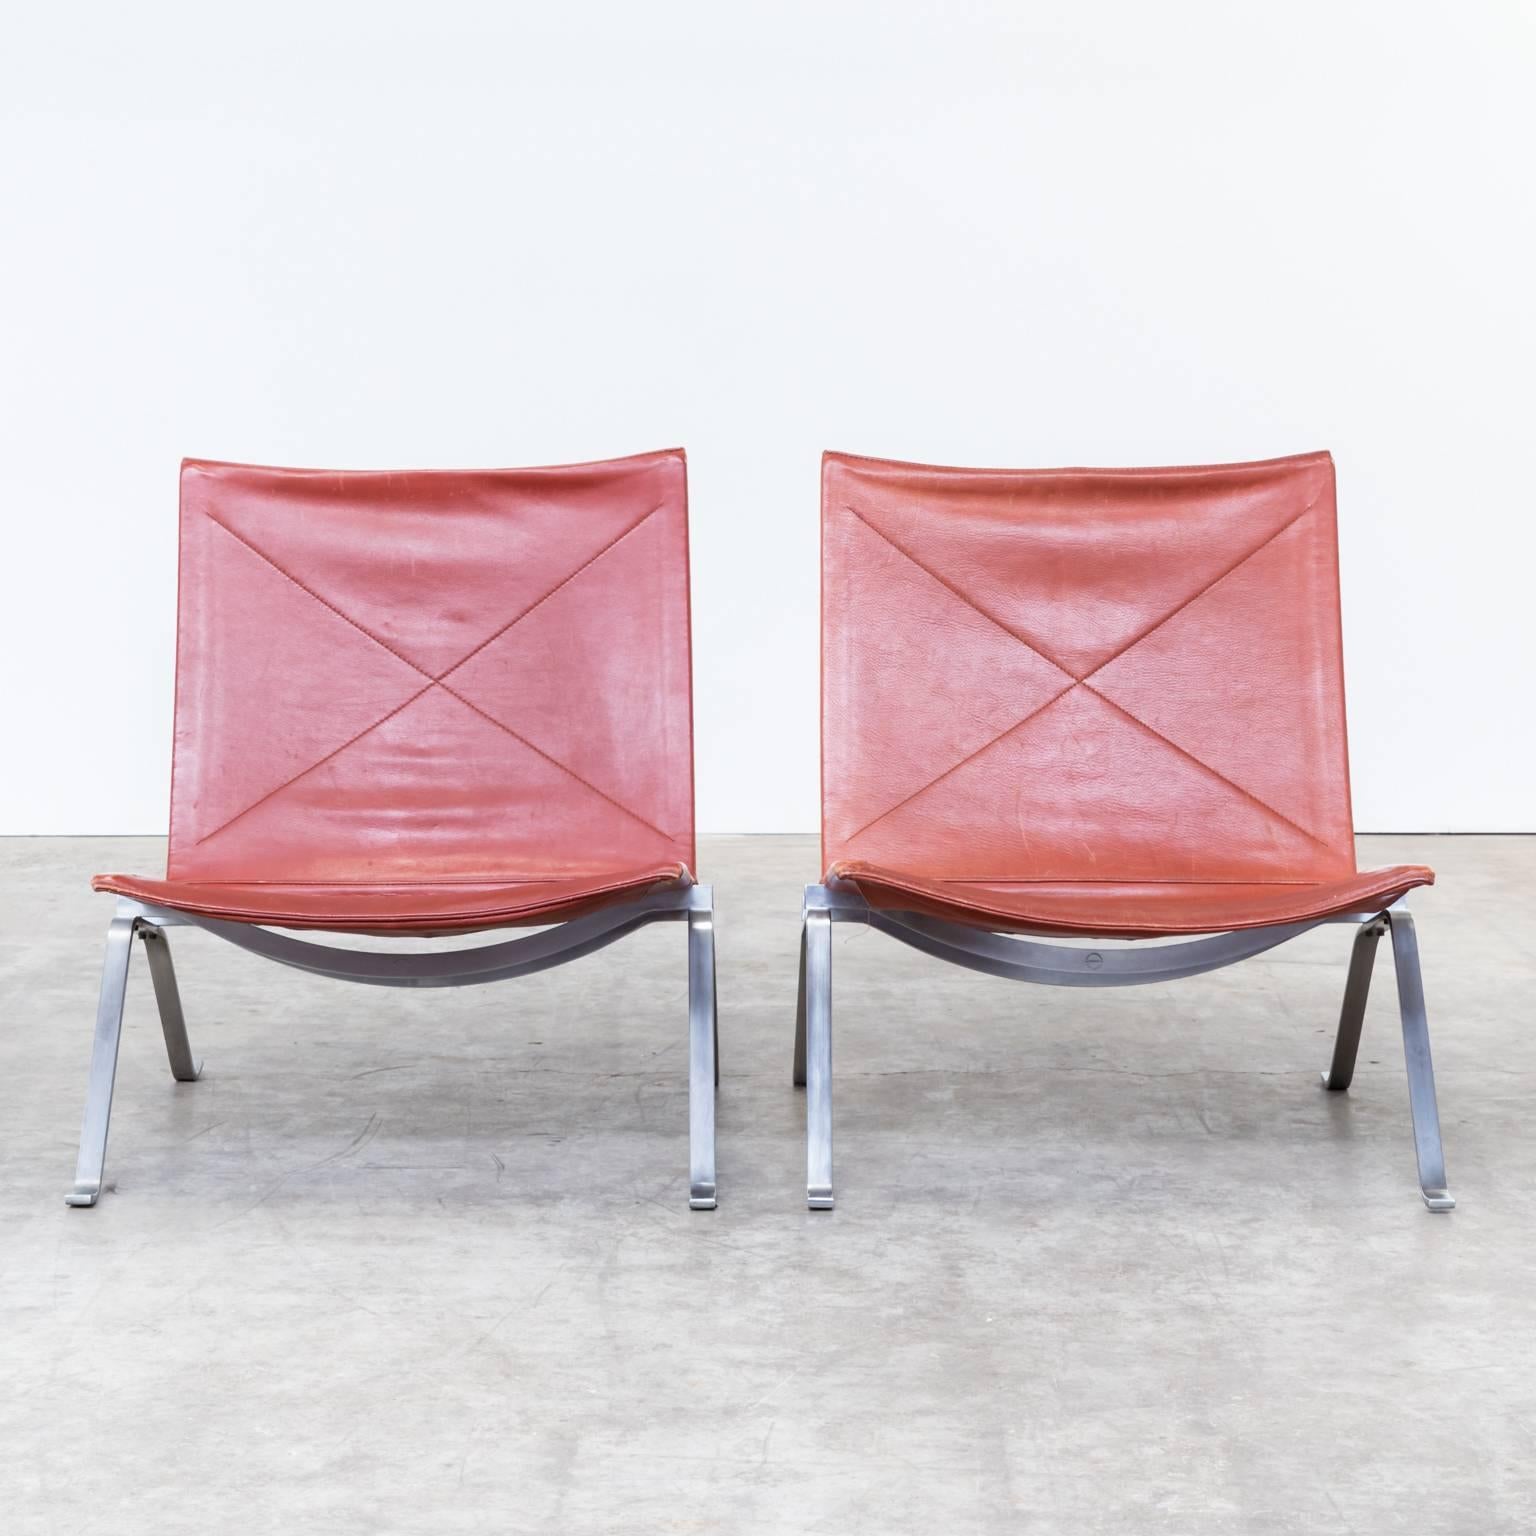 One set of two 1984s Poul Kjaerholm PK22 (design of 1956) bordeaux colored fauteuil for Fritz Hansen. Color between bordeaux and cognac. Good condition, wear consistent with age and use. Dimensions per fauteuil: 63cm (W) x 65cm (D) x 72.5cm H) seat